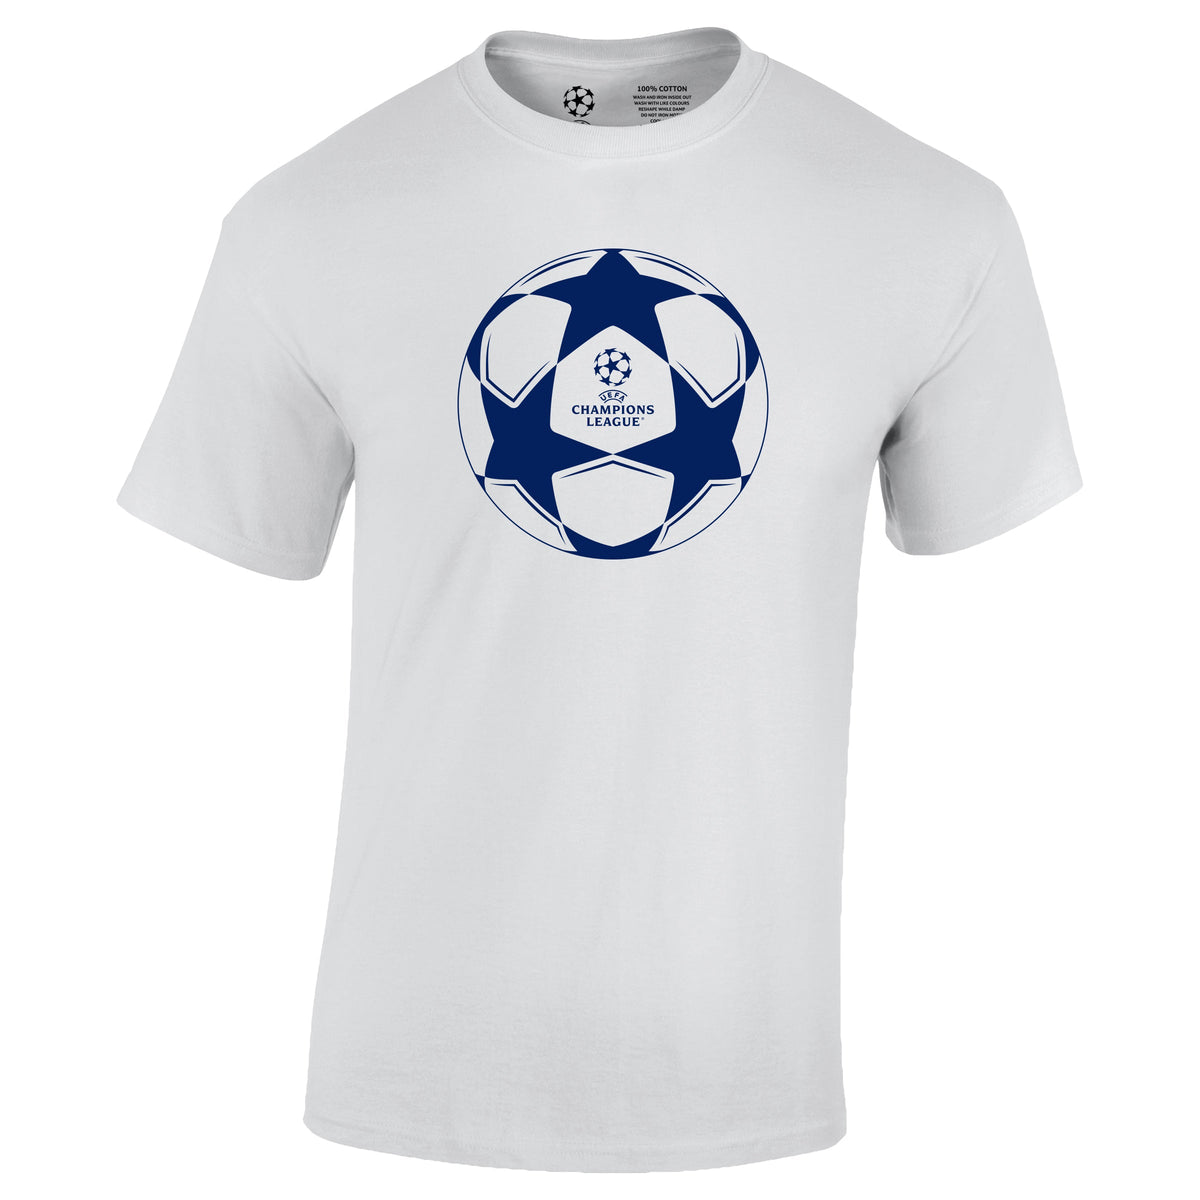 Champions League Football T-Shirt White